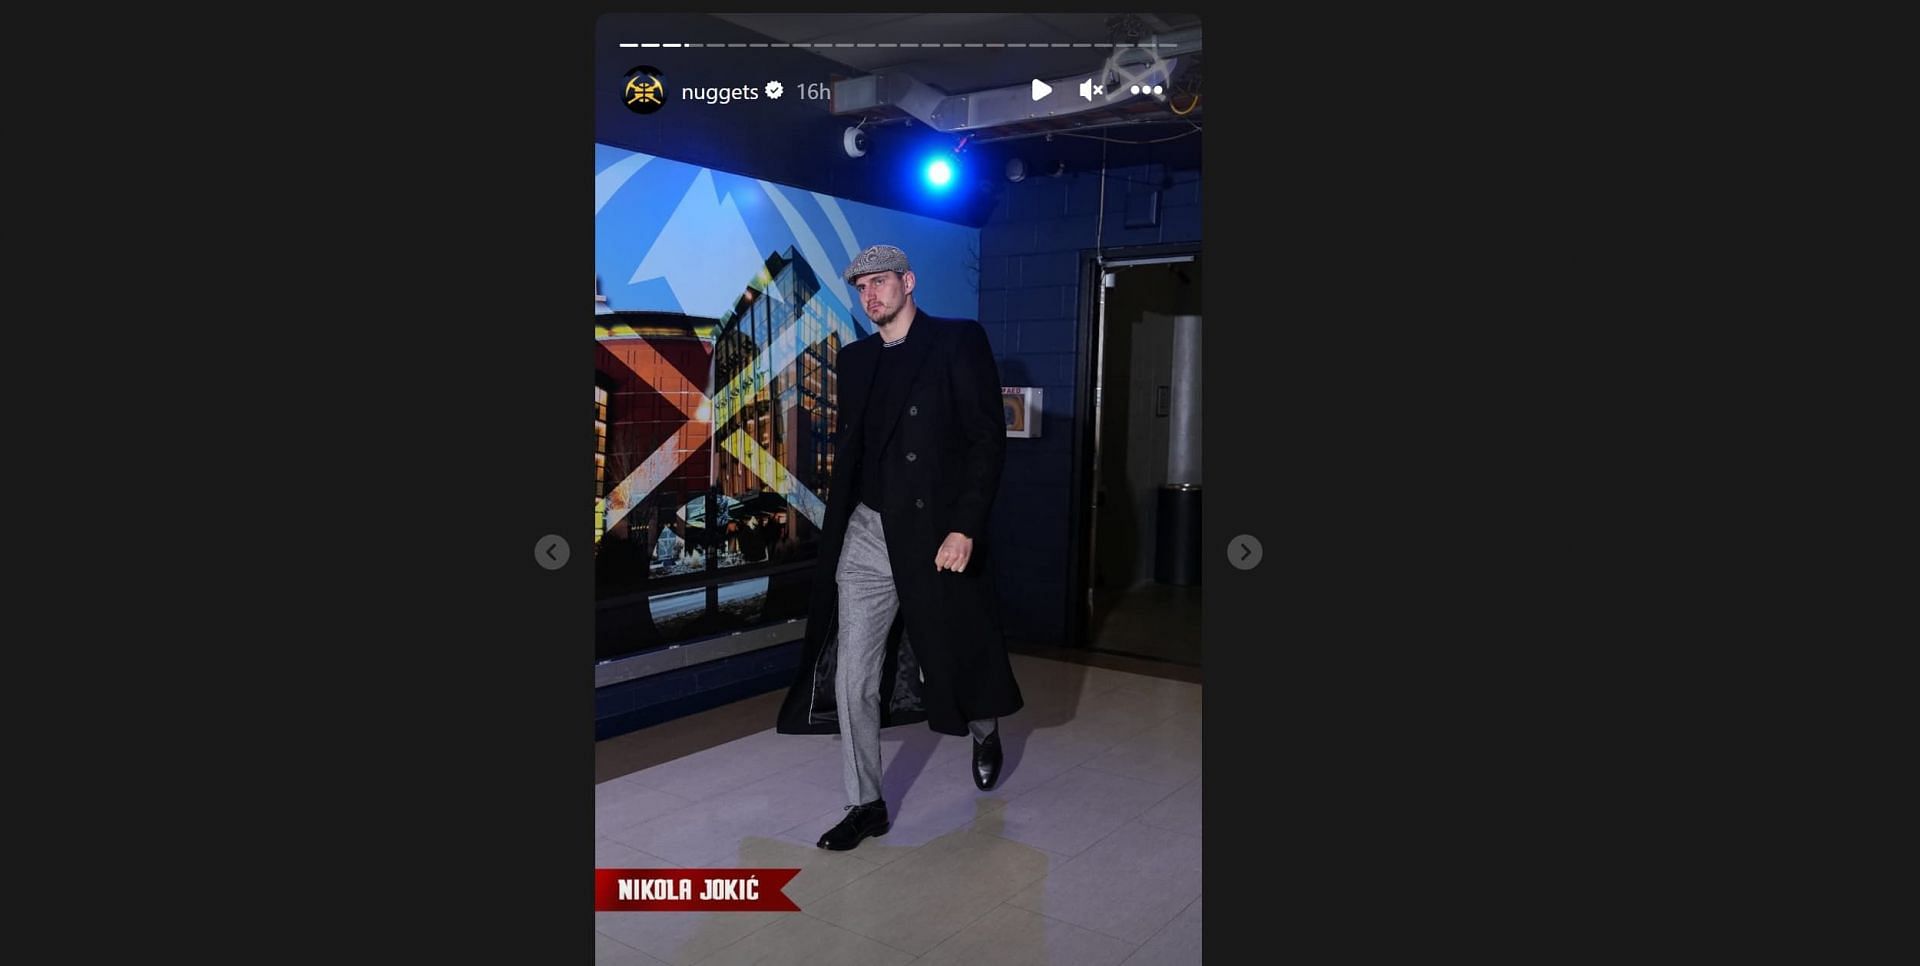 Nikola Jokic arrived to the arena dressed like a Peaky Blinder